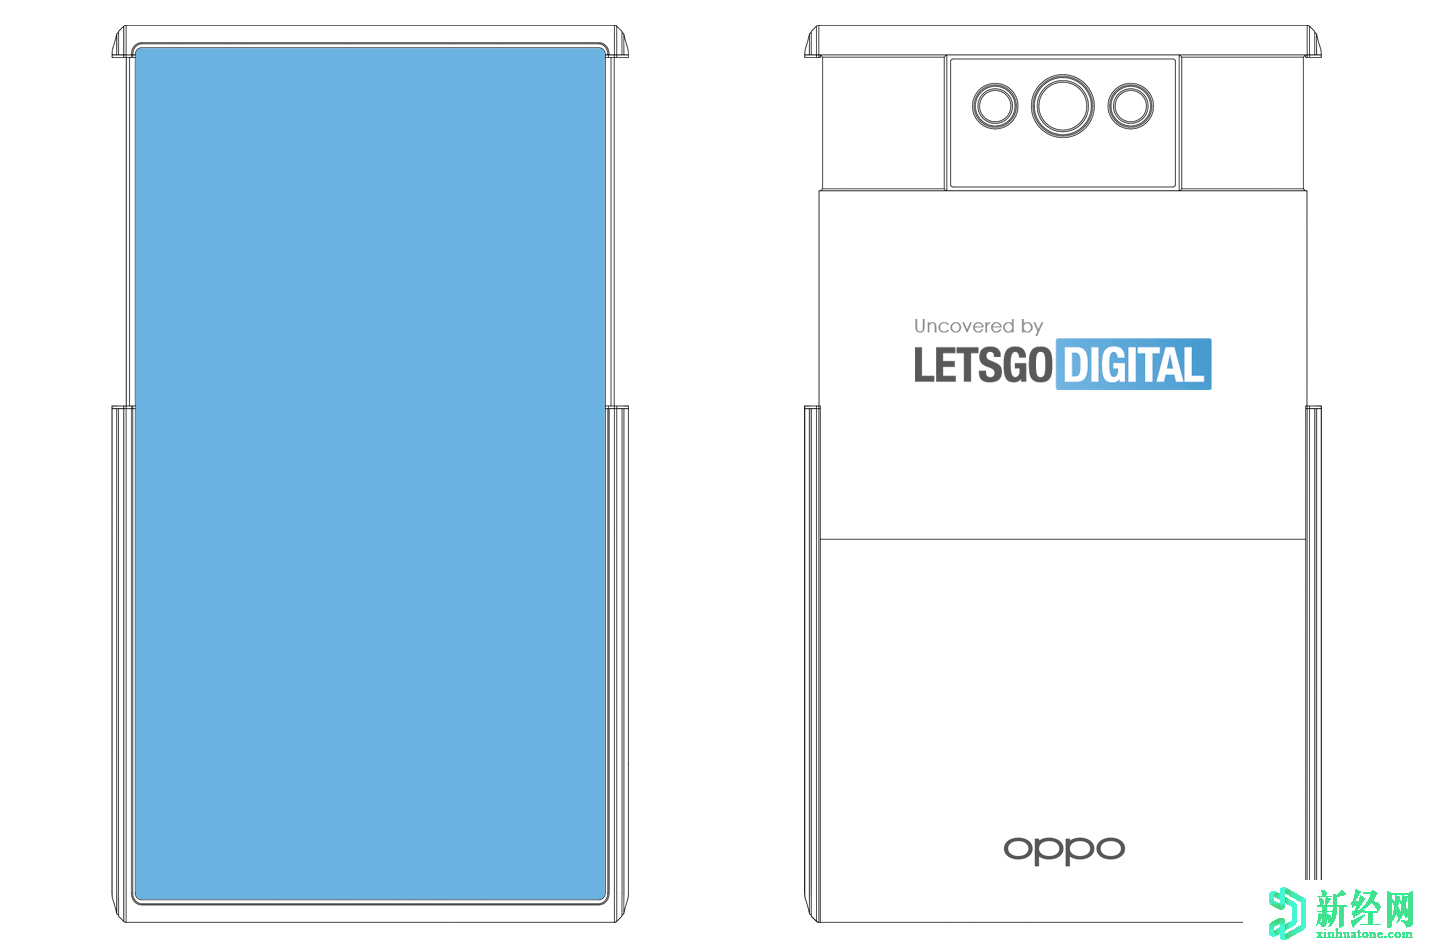 OPPO获得具有可扩展显示屏的滑盖智能手机的专利